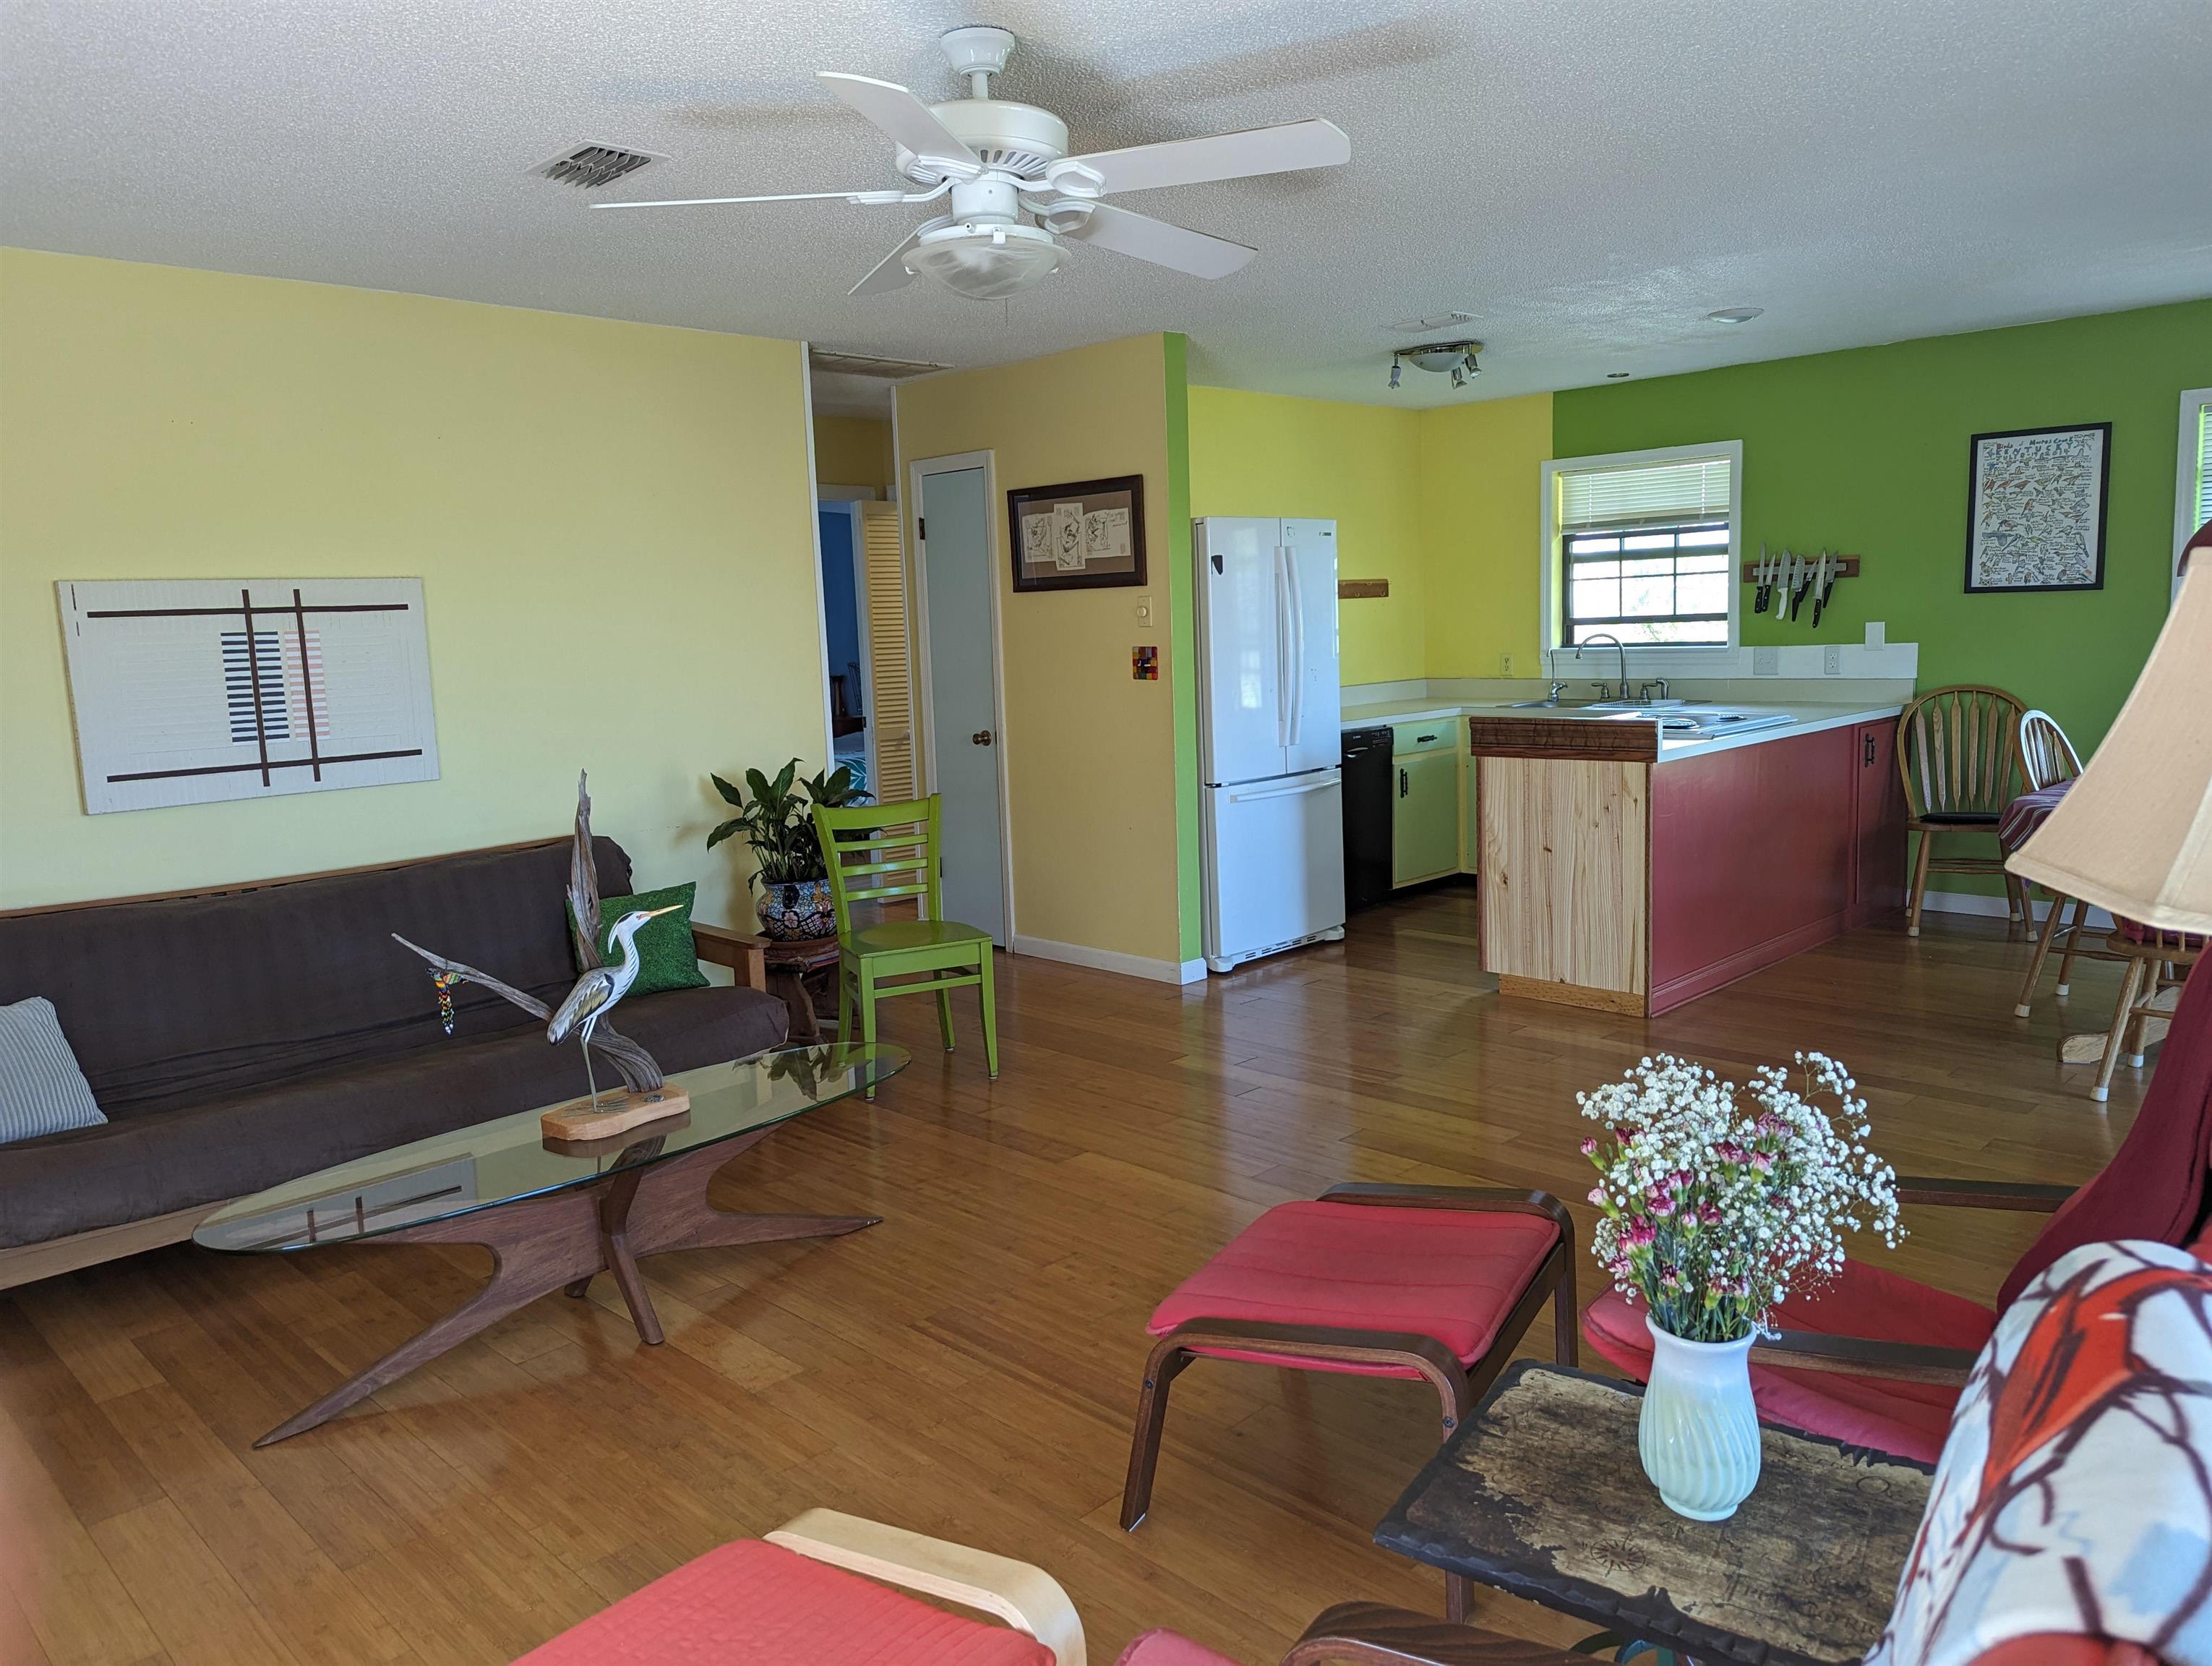 7 Blue Crab Lane,PANACEA,Florida 32346,3 Bedrooms Bedrooms,1 BathroomBathrooms,Detached single family,7 Blue Crab Lane,369160